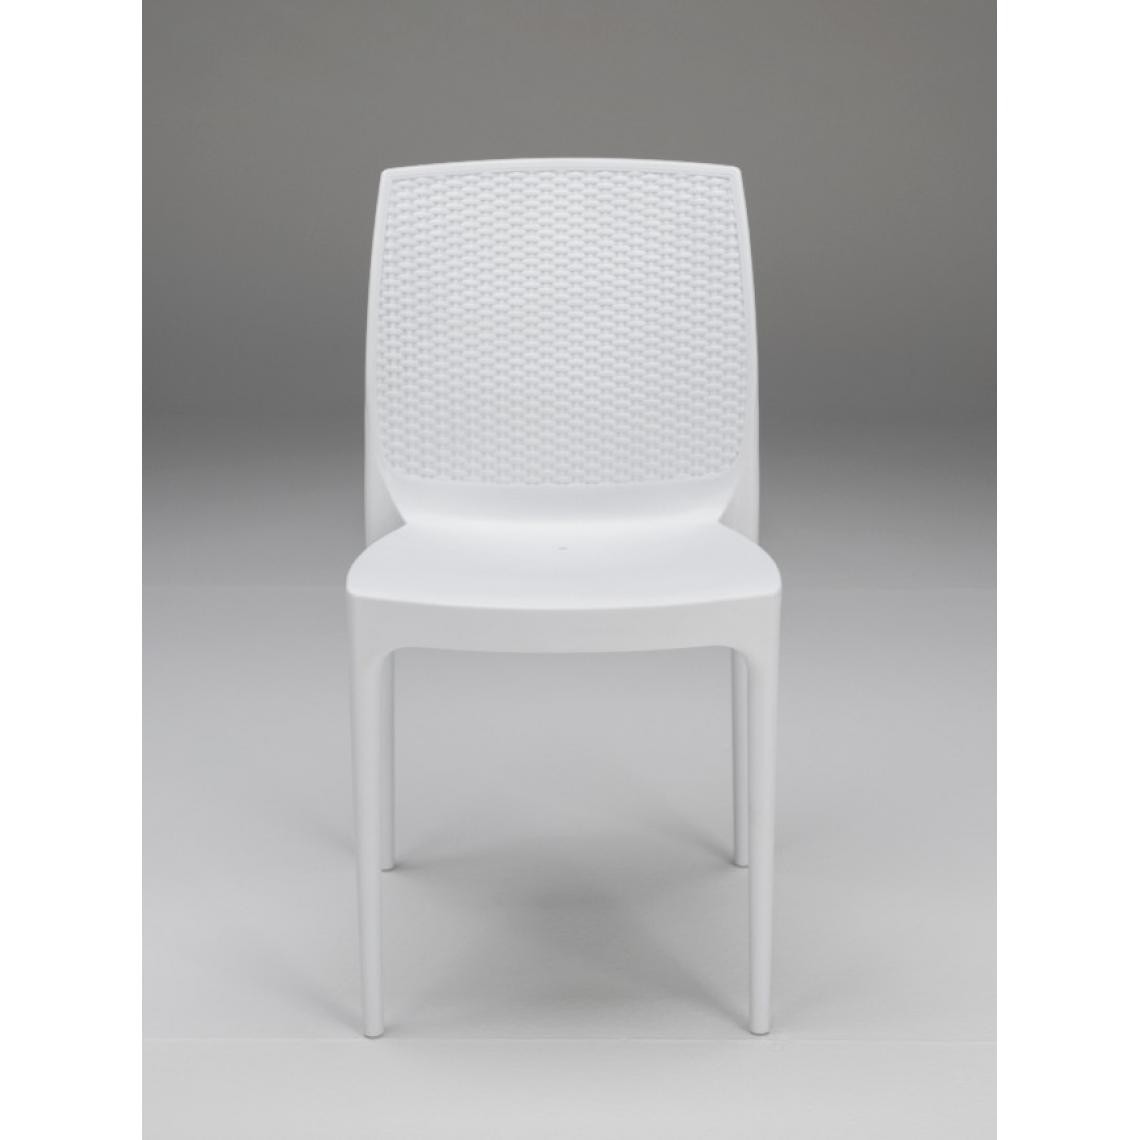 Homemania - HOMEMANIA Set de 2 chaises Salerno - Blanc - 45 x 57 x 83,5 cm - Chaises de jardin